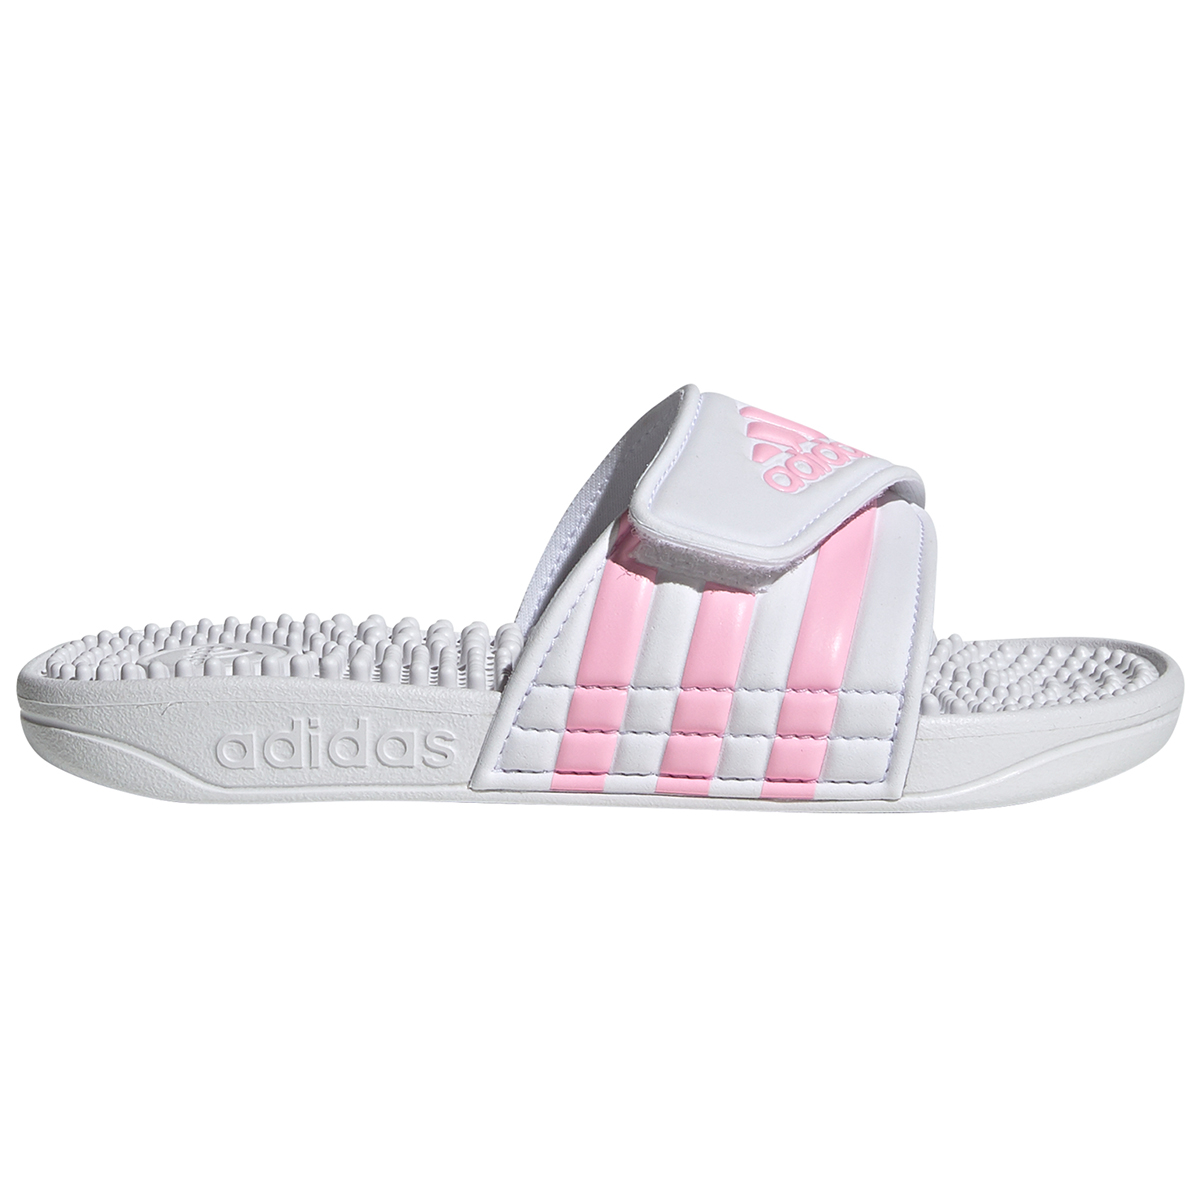 Adidas Girls' Adissage Slide Sandals - White, 2